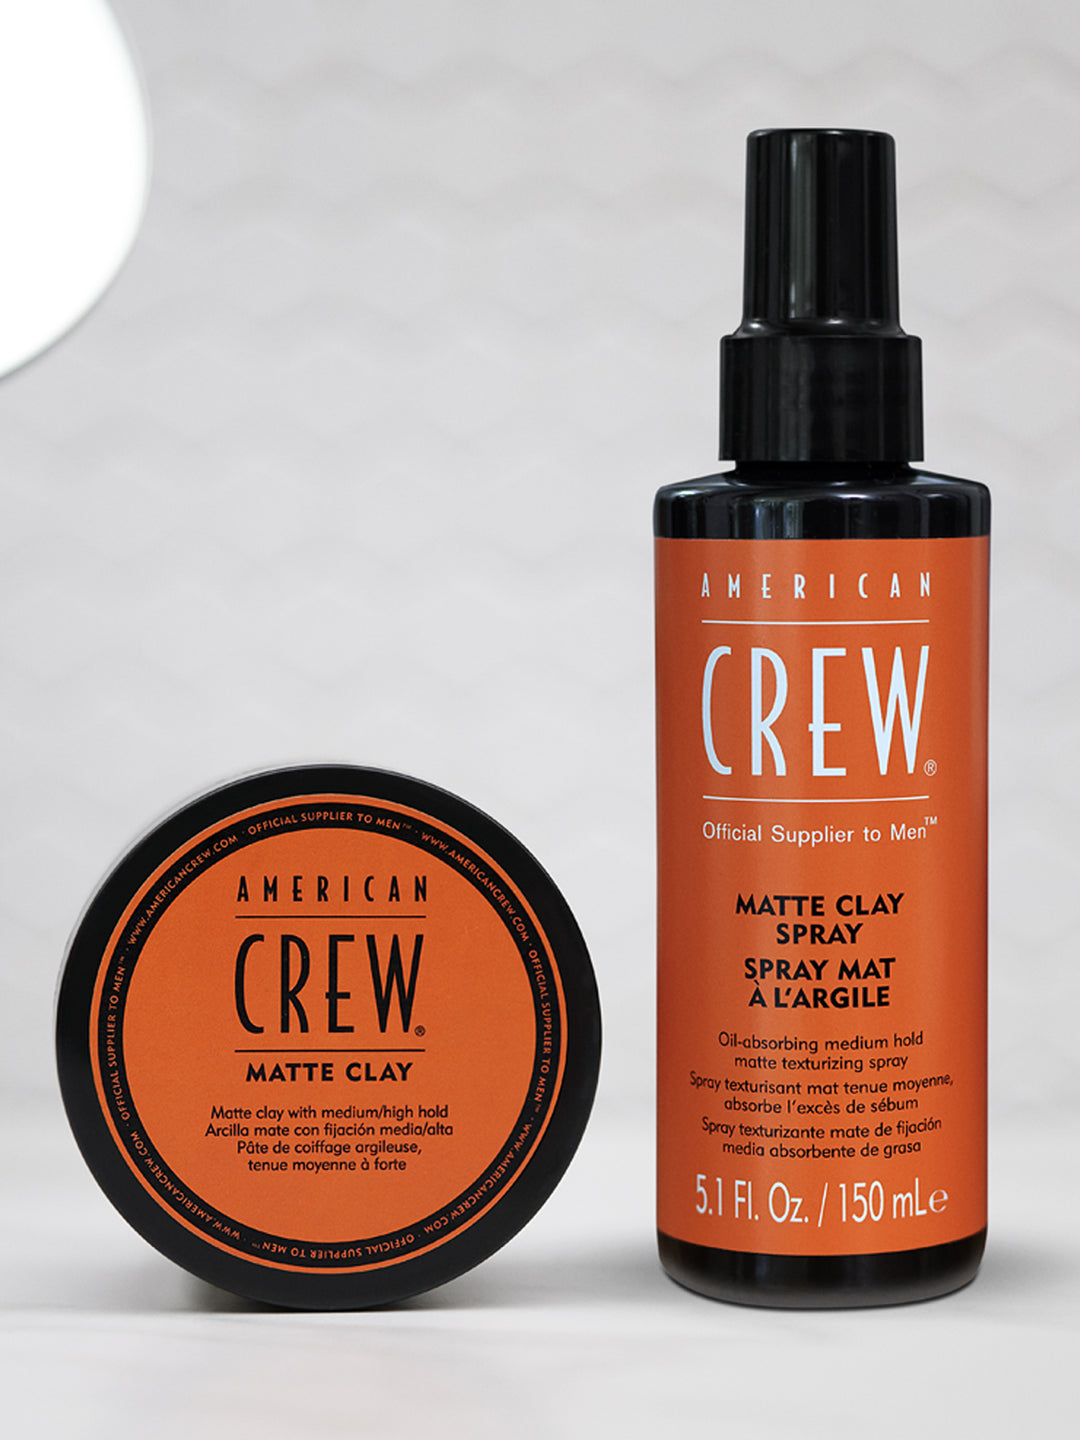 Beeswax Texturizing Hair Clay  Organic shampoo, salon approved